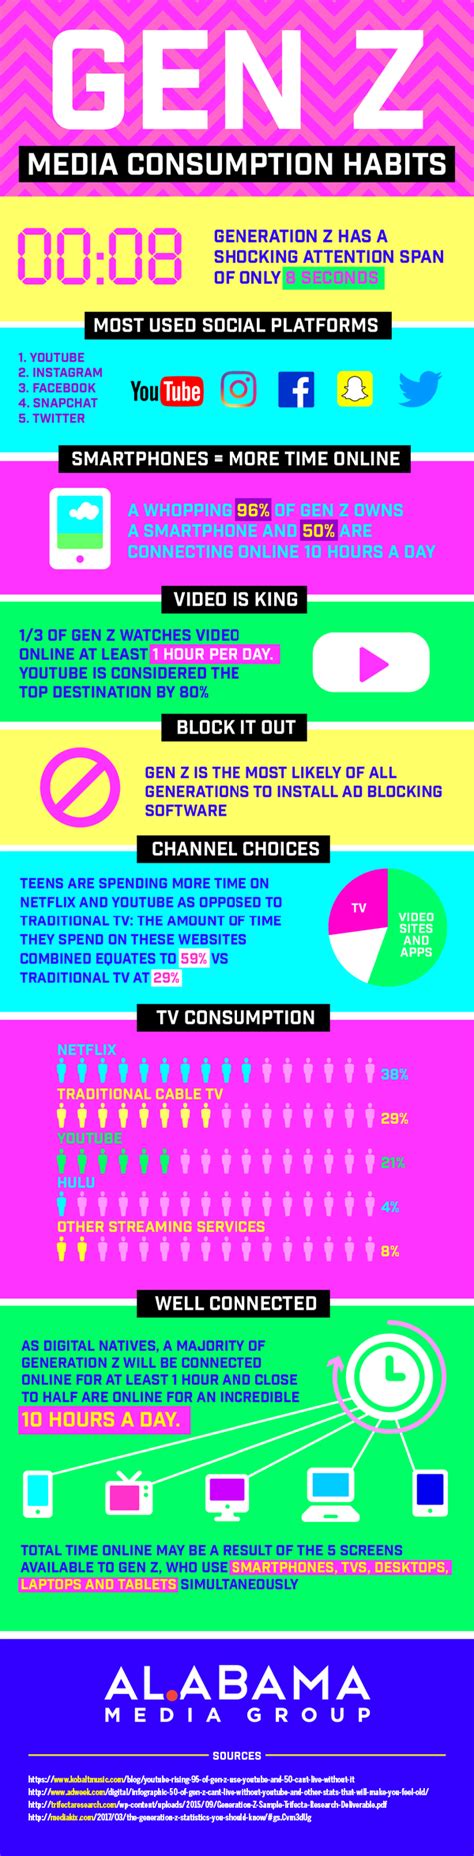 Generation Zs Media Habits An Infographic Alabama